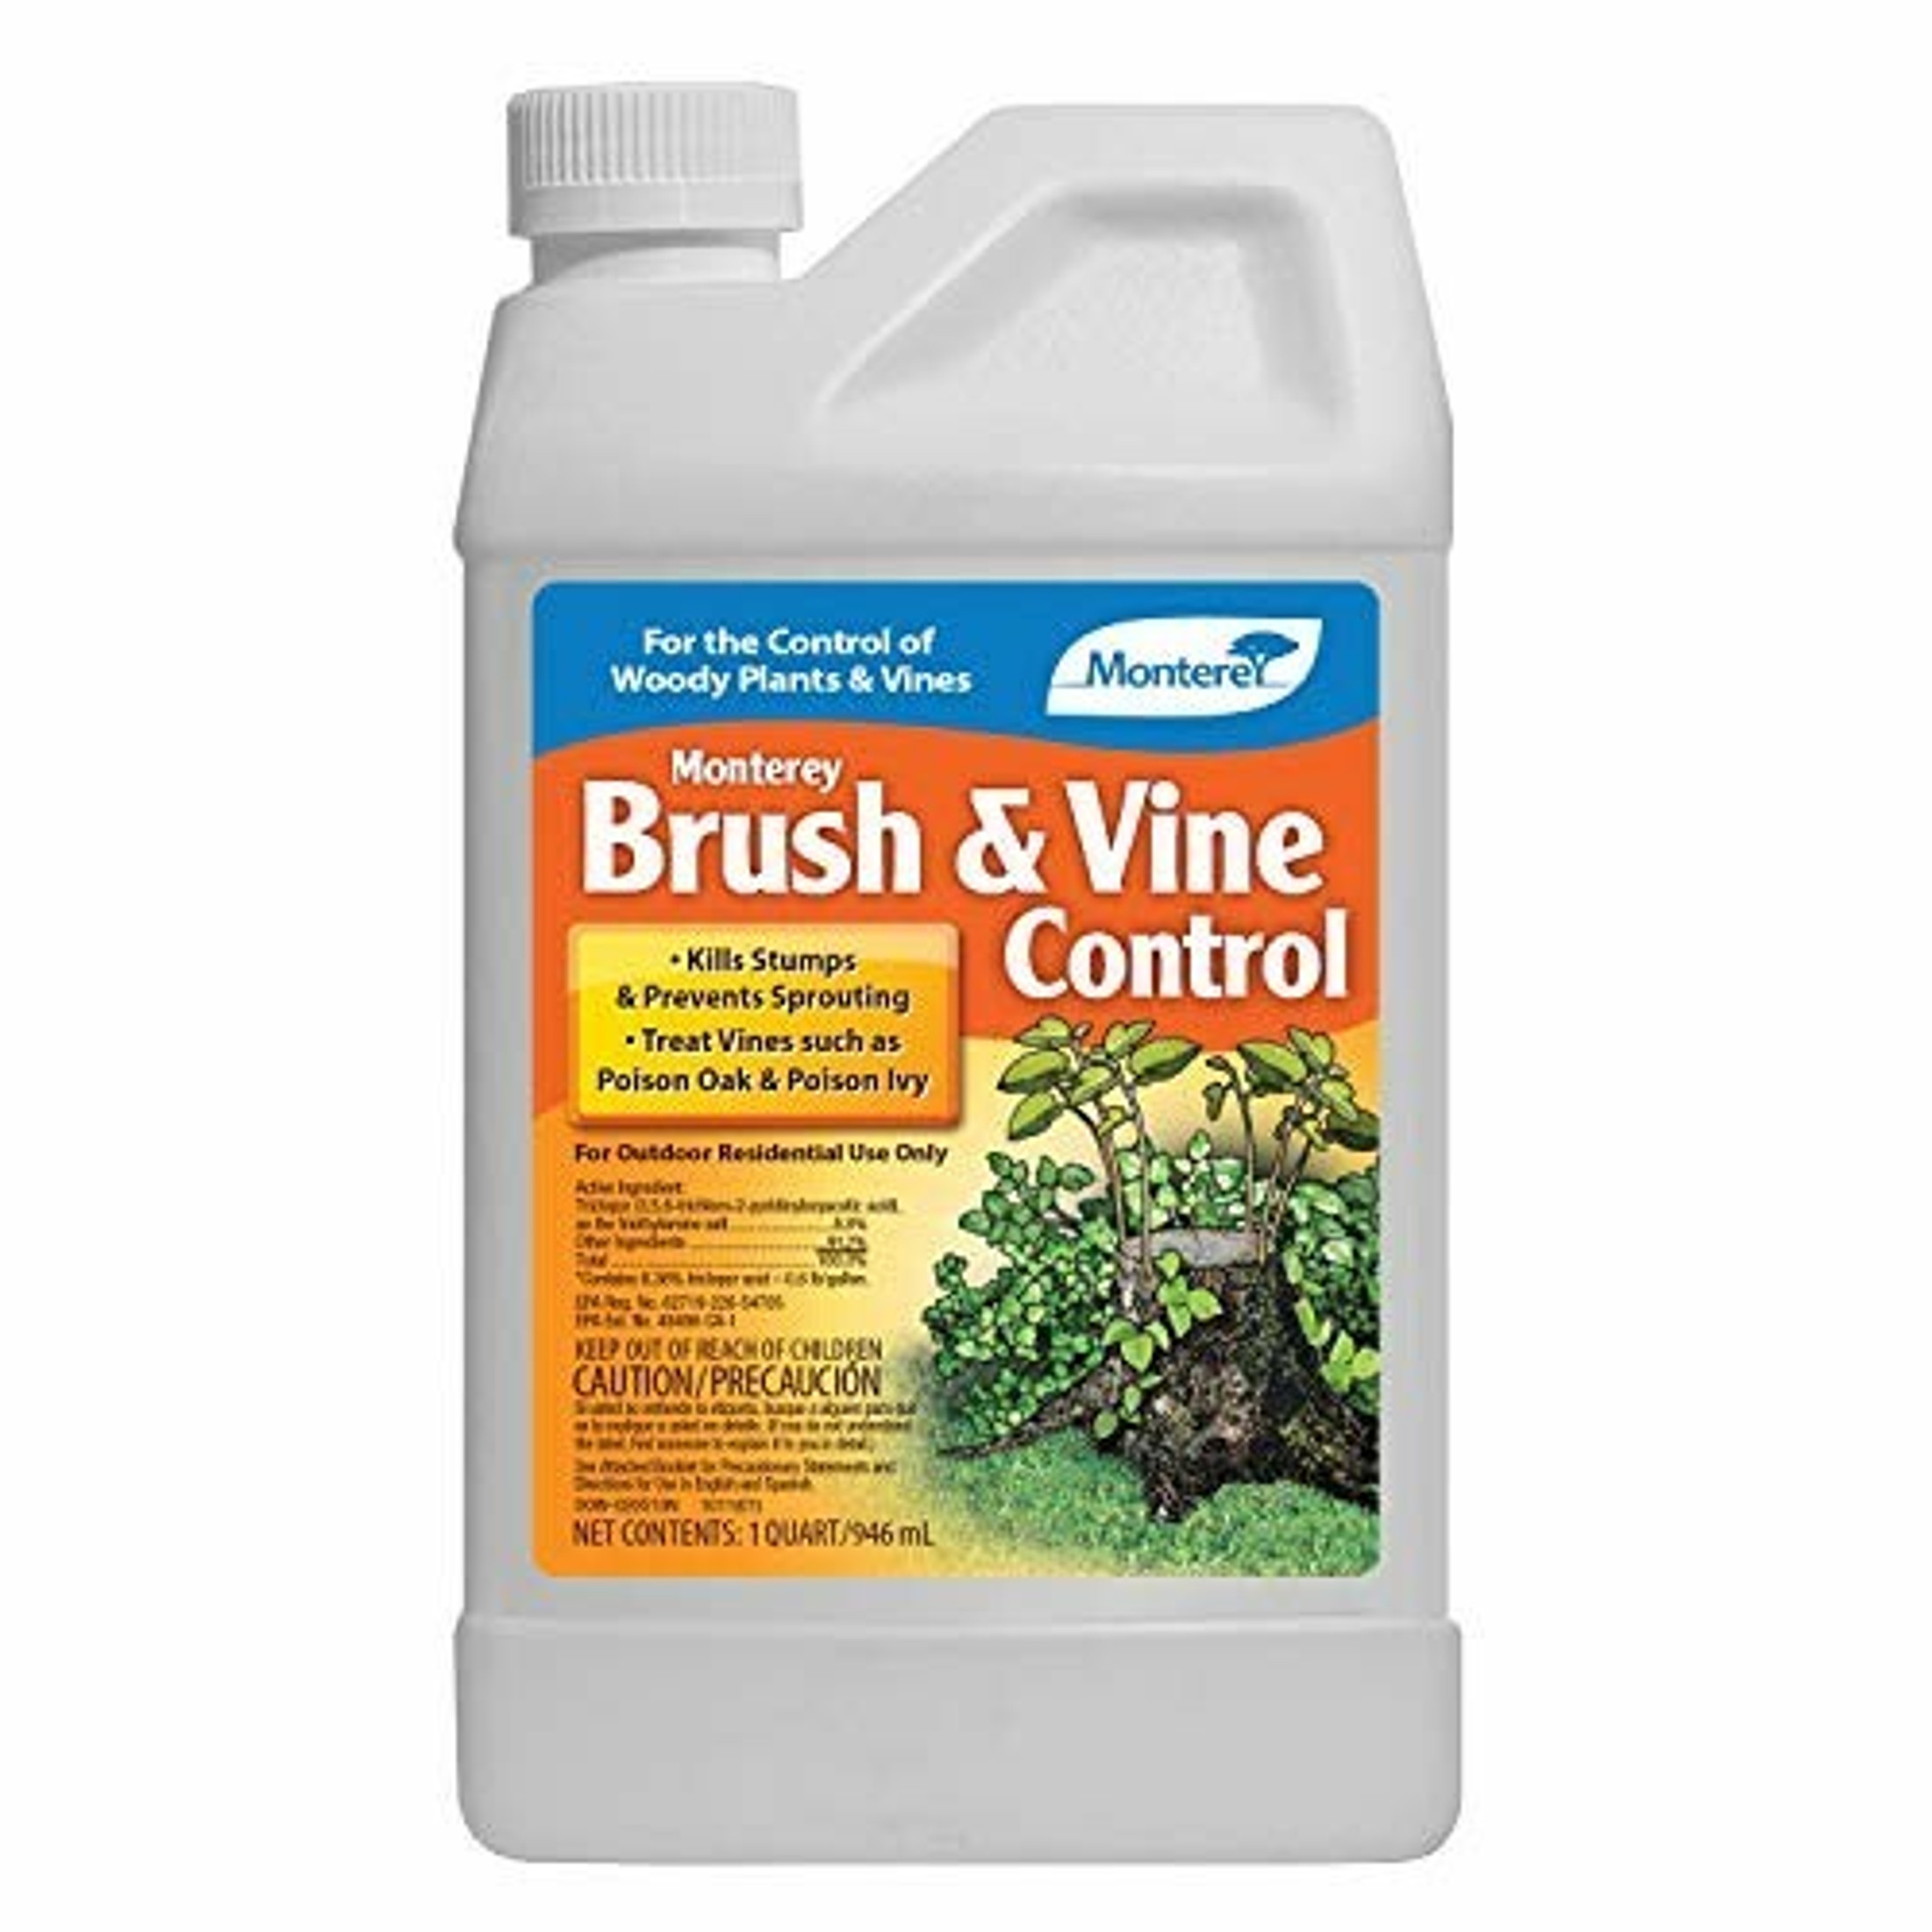 Monterey LG 5366 Brush & Vine Control, Concentrate, 32 oz